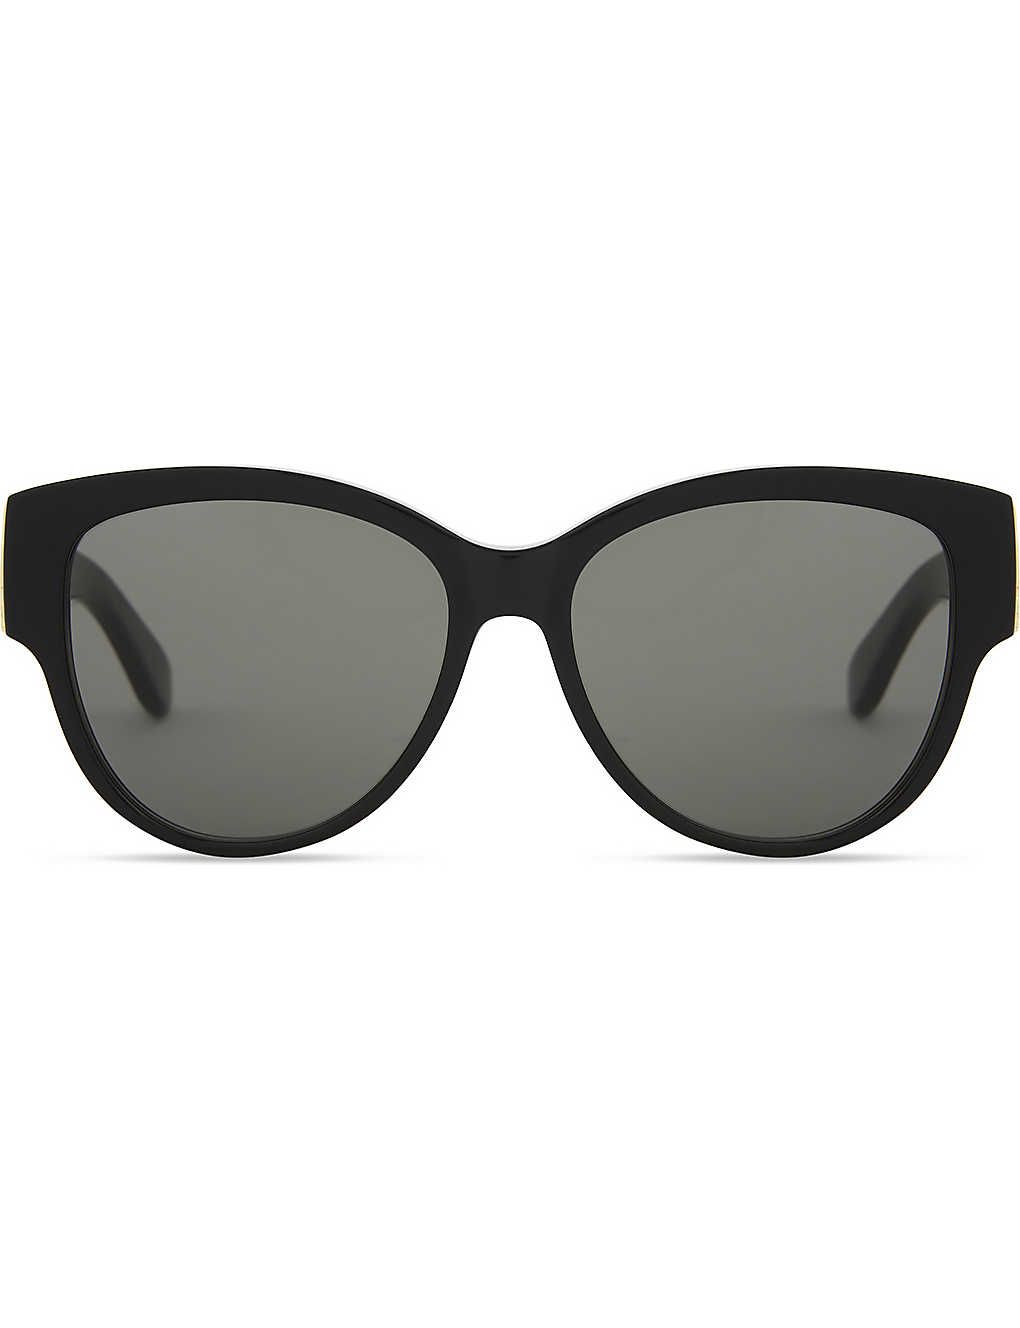 M3 oval-frame sunglasses | Selfridges